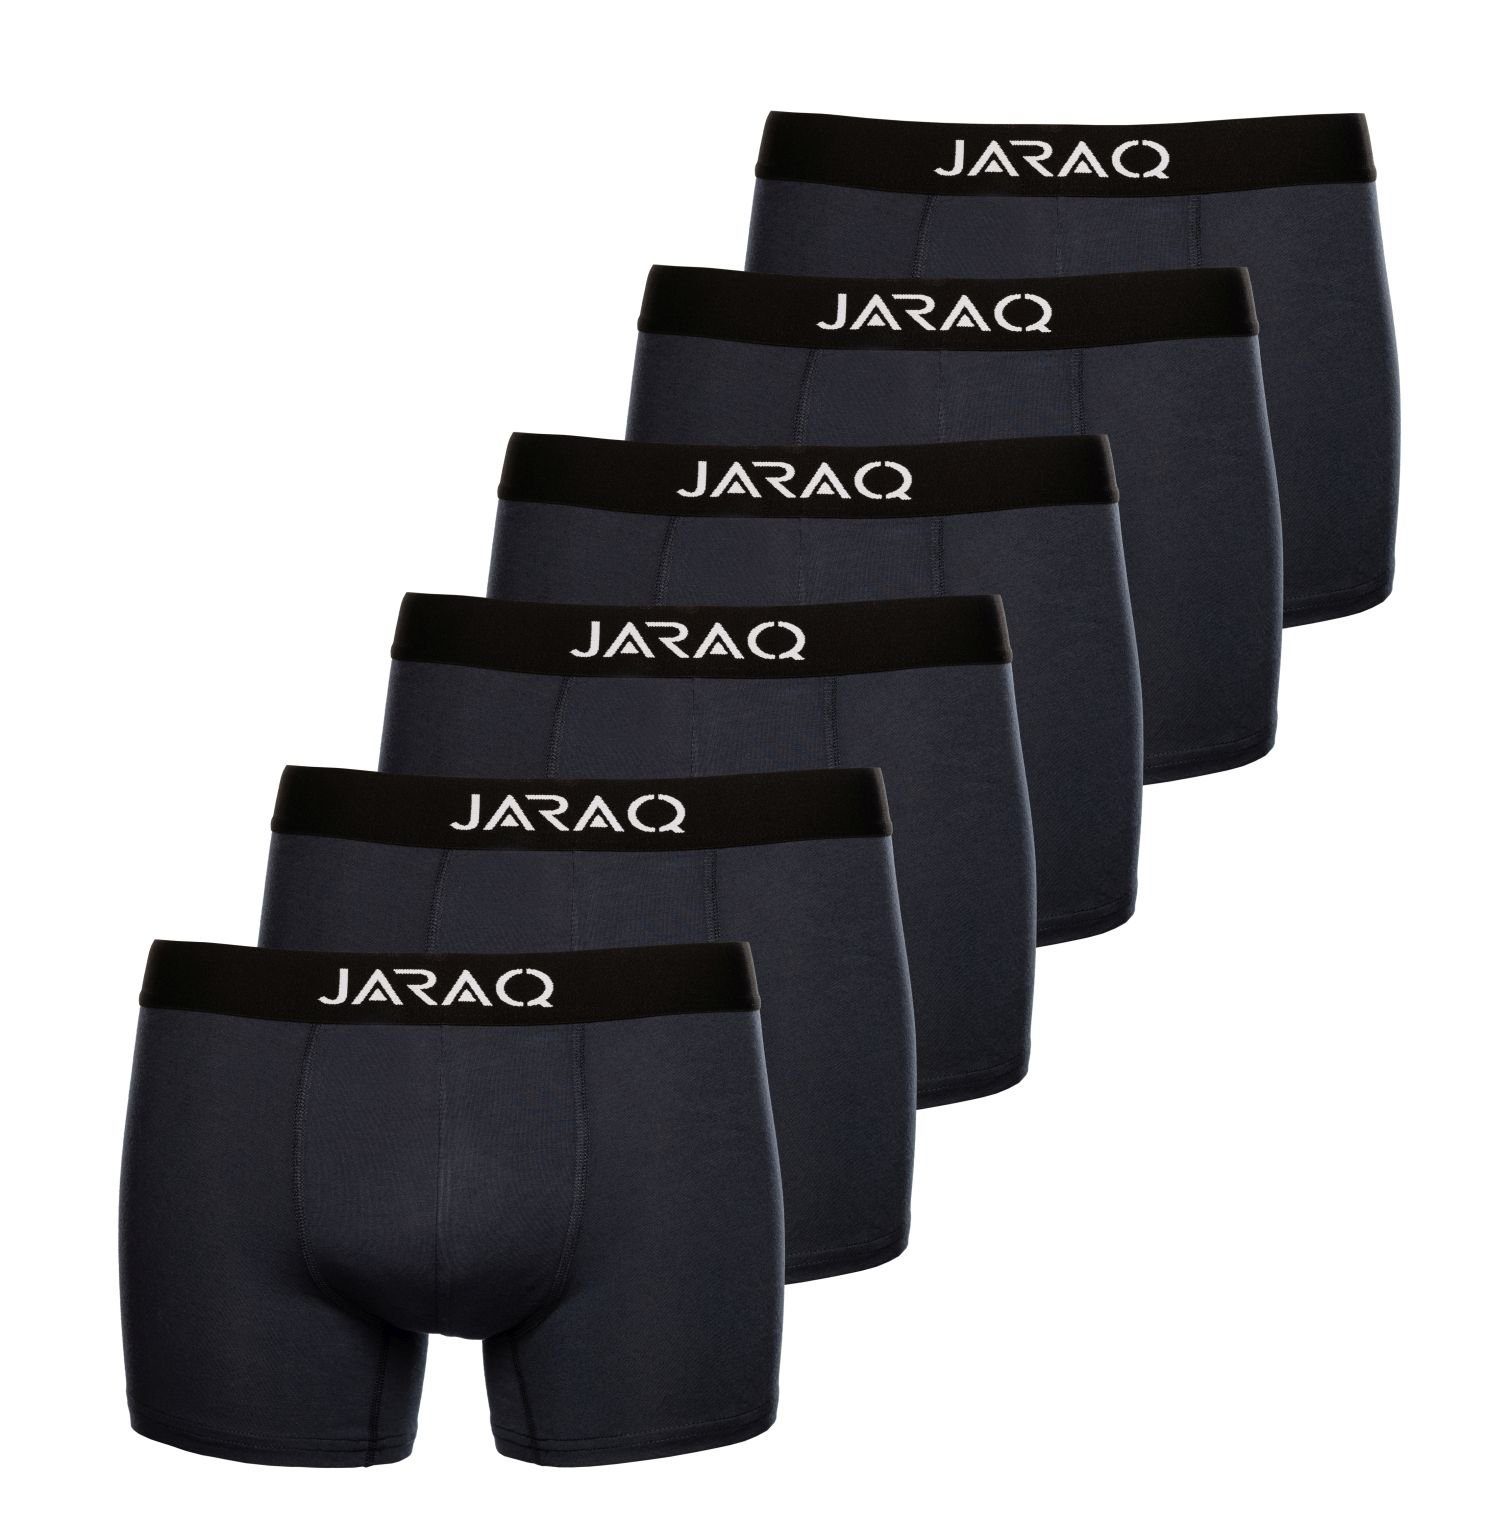 JARAQ Boxer JARAQ Bambus Boxershorts Herren 6er Pack Perfekte Passform Unterhosen für Männer S - 4XL Petrol | Boxer anliegend